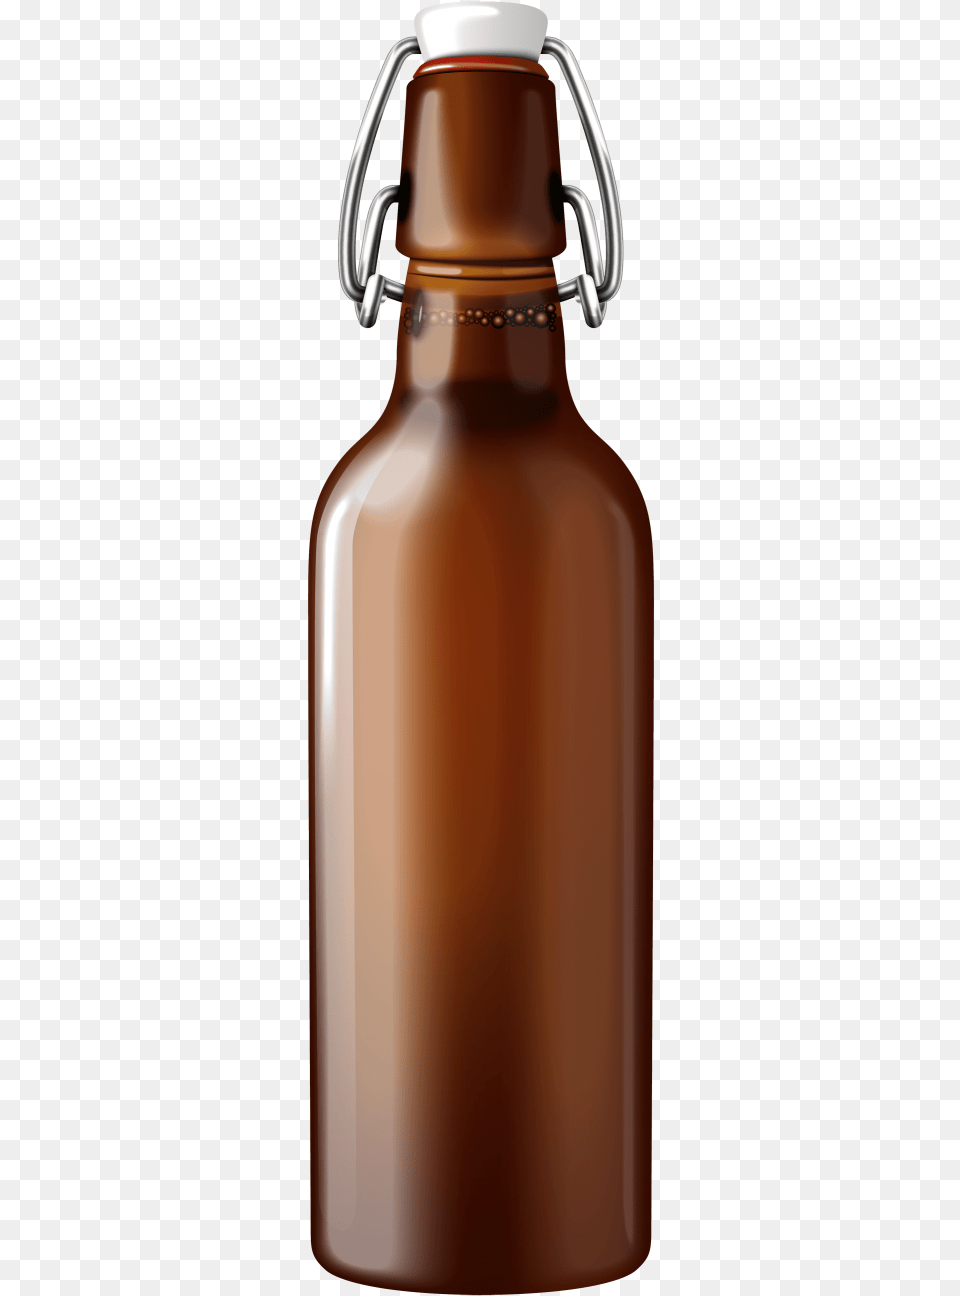 Clipart Beer Heineken Beer, Alcohol, Beverage, Bottle, Beer Bottle Png Image